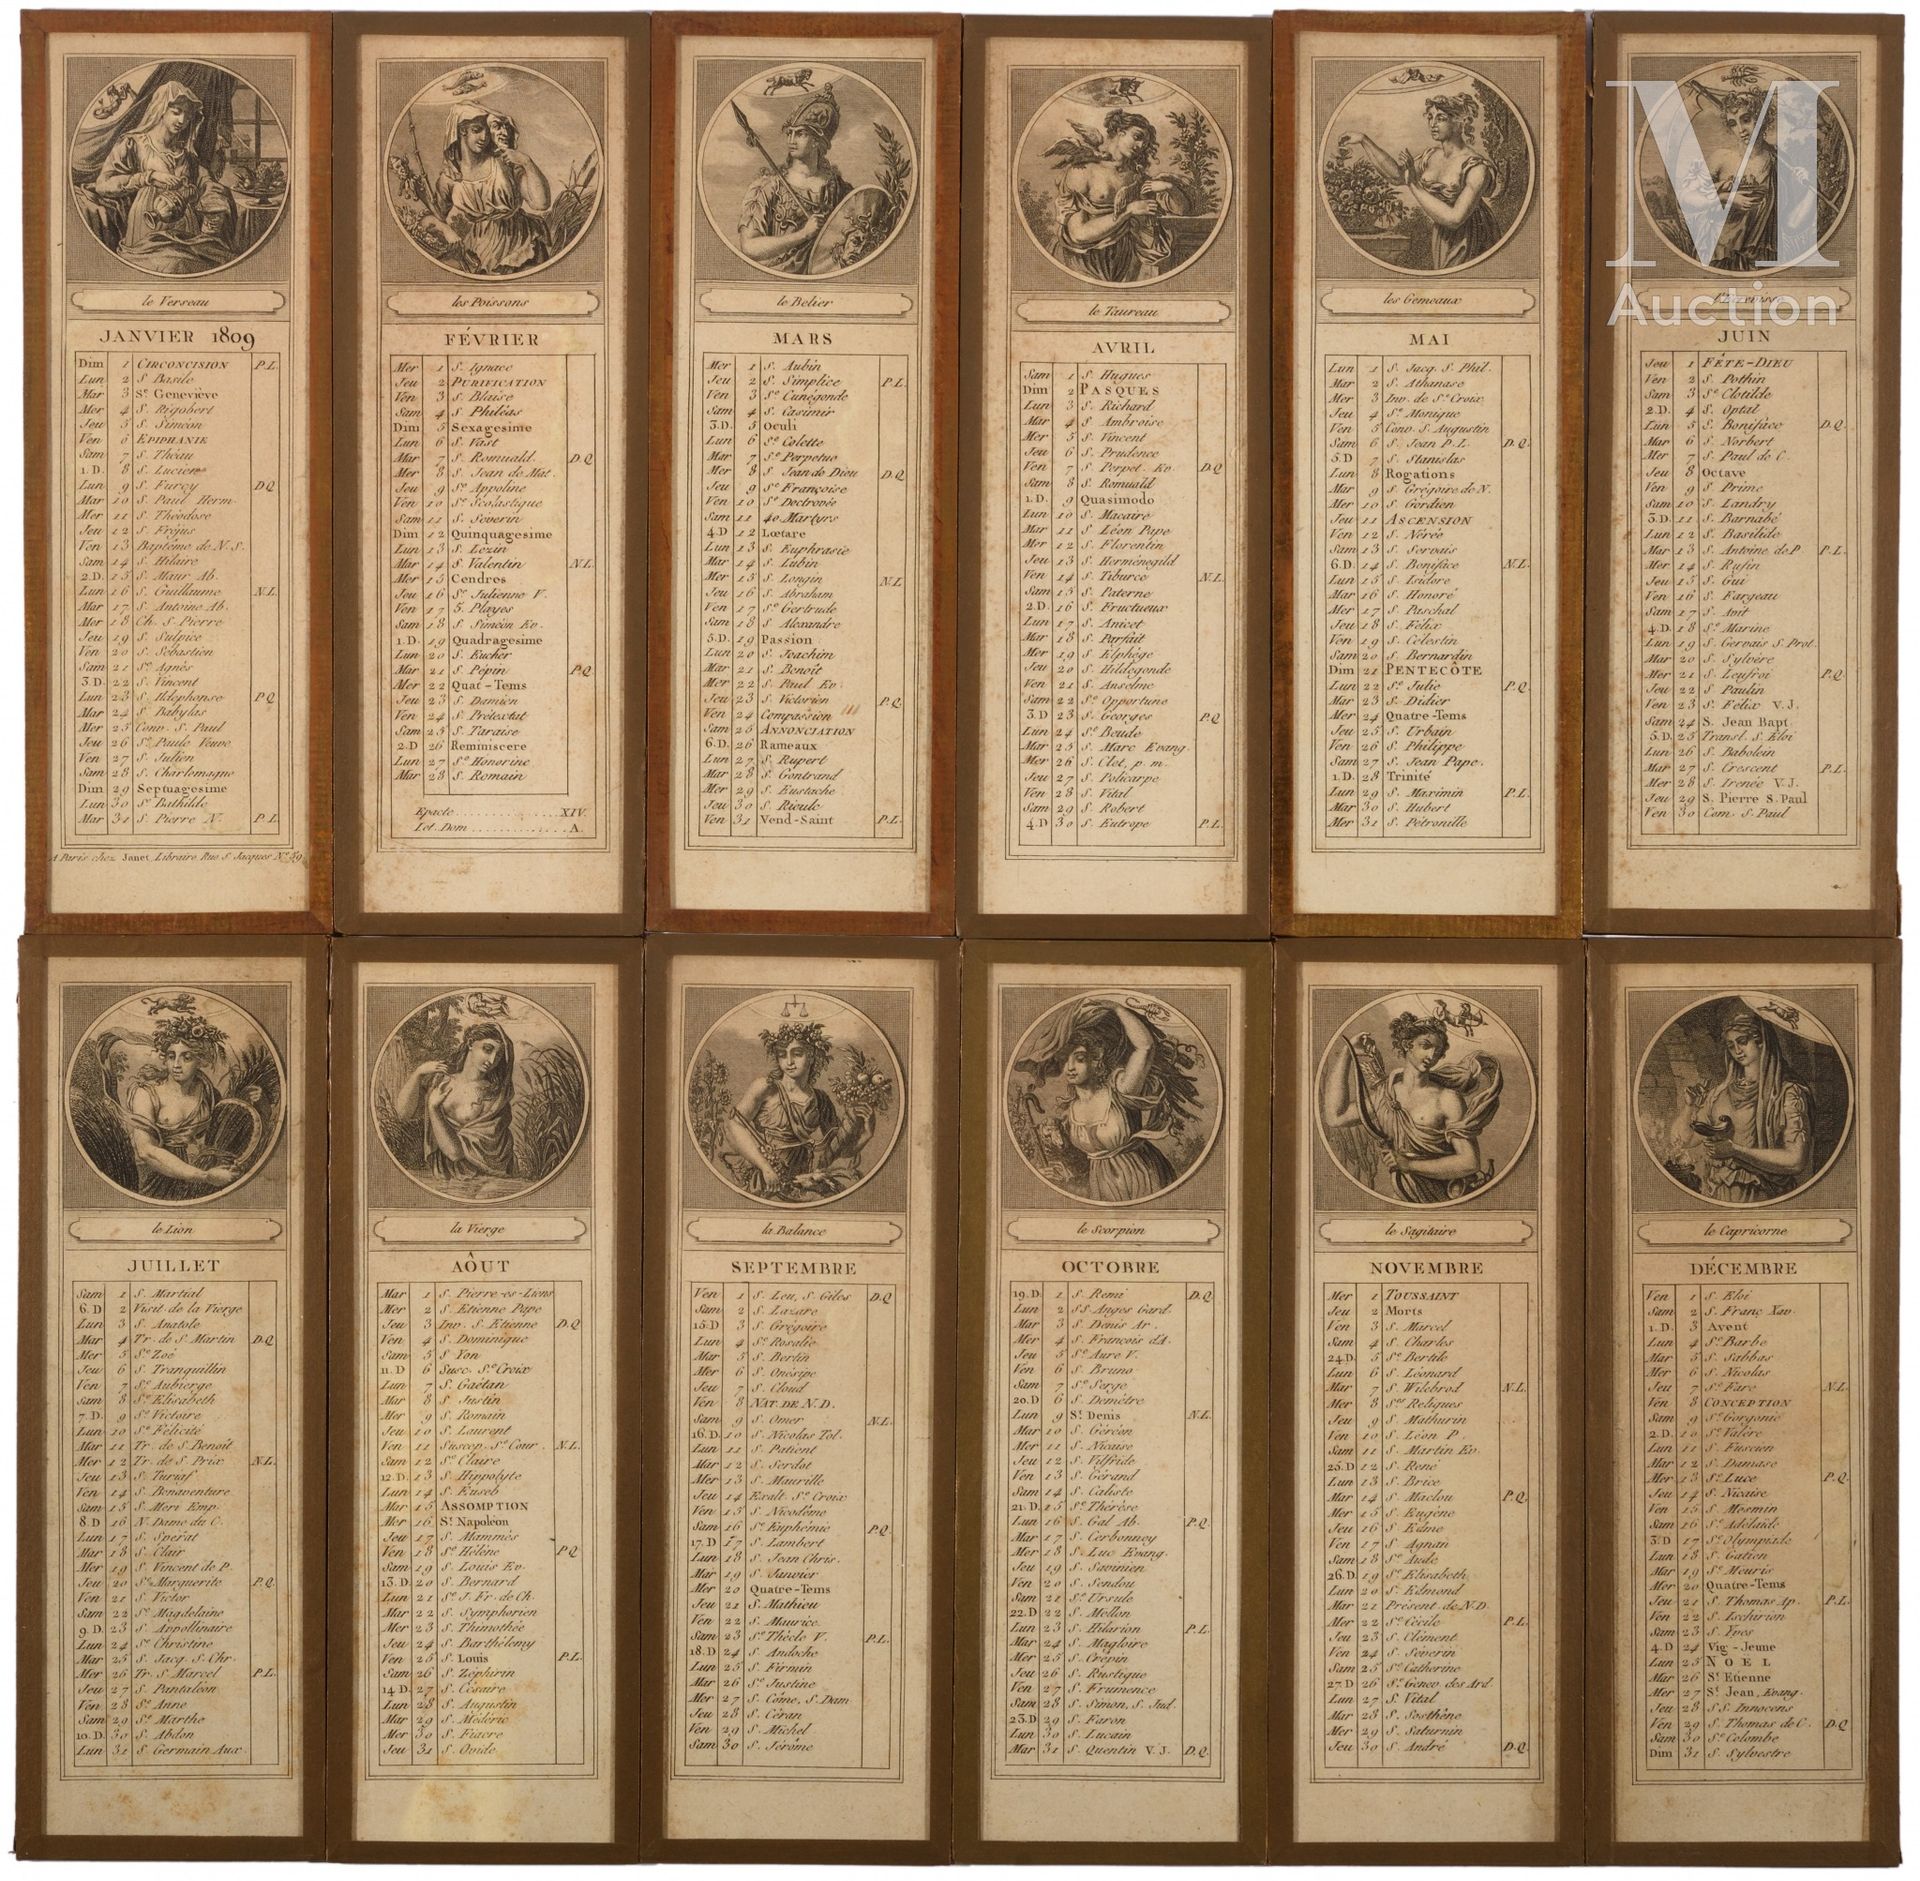 Les douze mois de l'année 1889 由珍妮特创作的12幅版画组成的套装。包括7月和8月在内的1789年的四个月。

18世纪